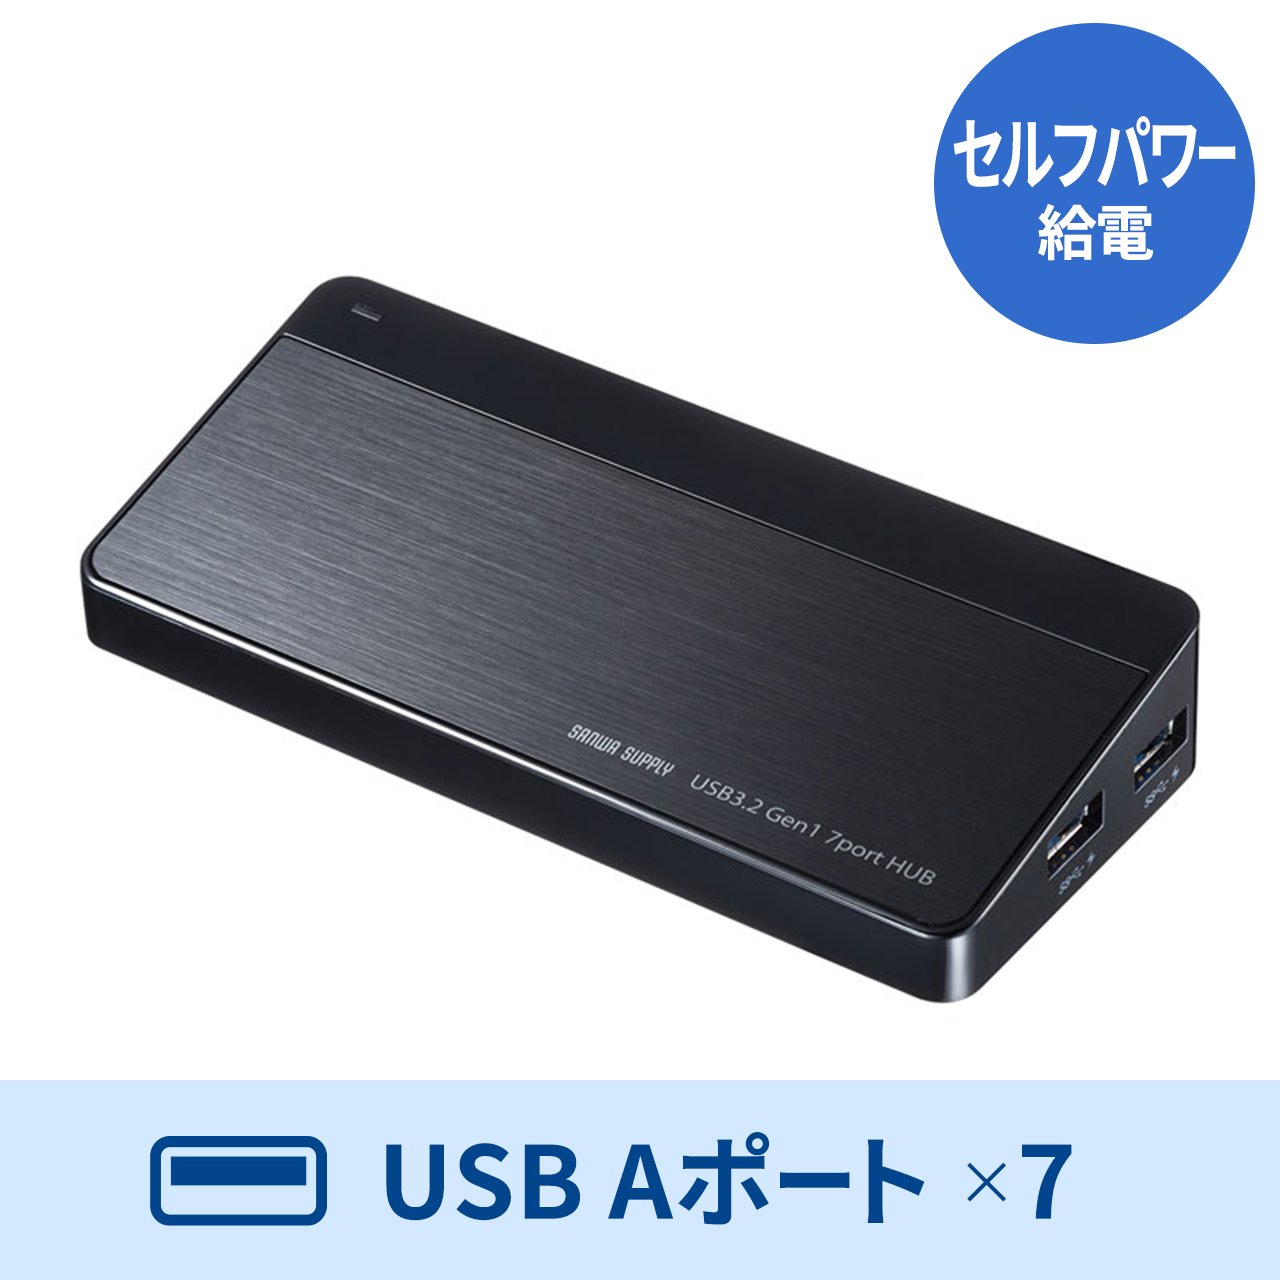 USBnu USB A 7|[g USB3.2 Gen1 [dΉ ACA_v^t ubN Win Mac Chrome Ztp[ 1m ubN USB-3H706BK